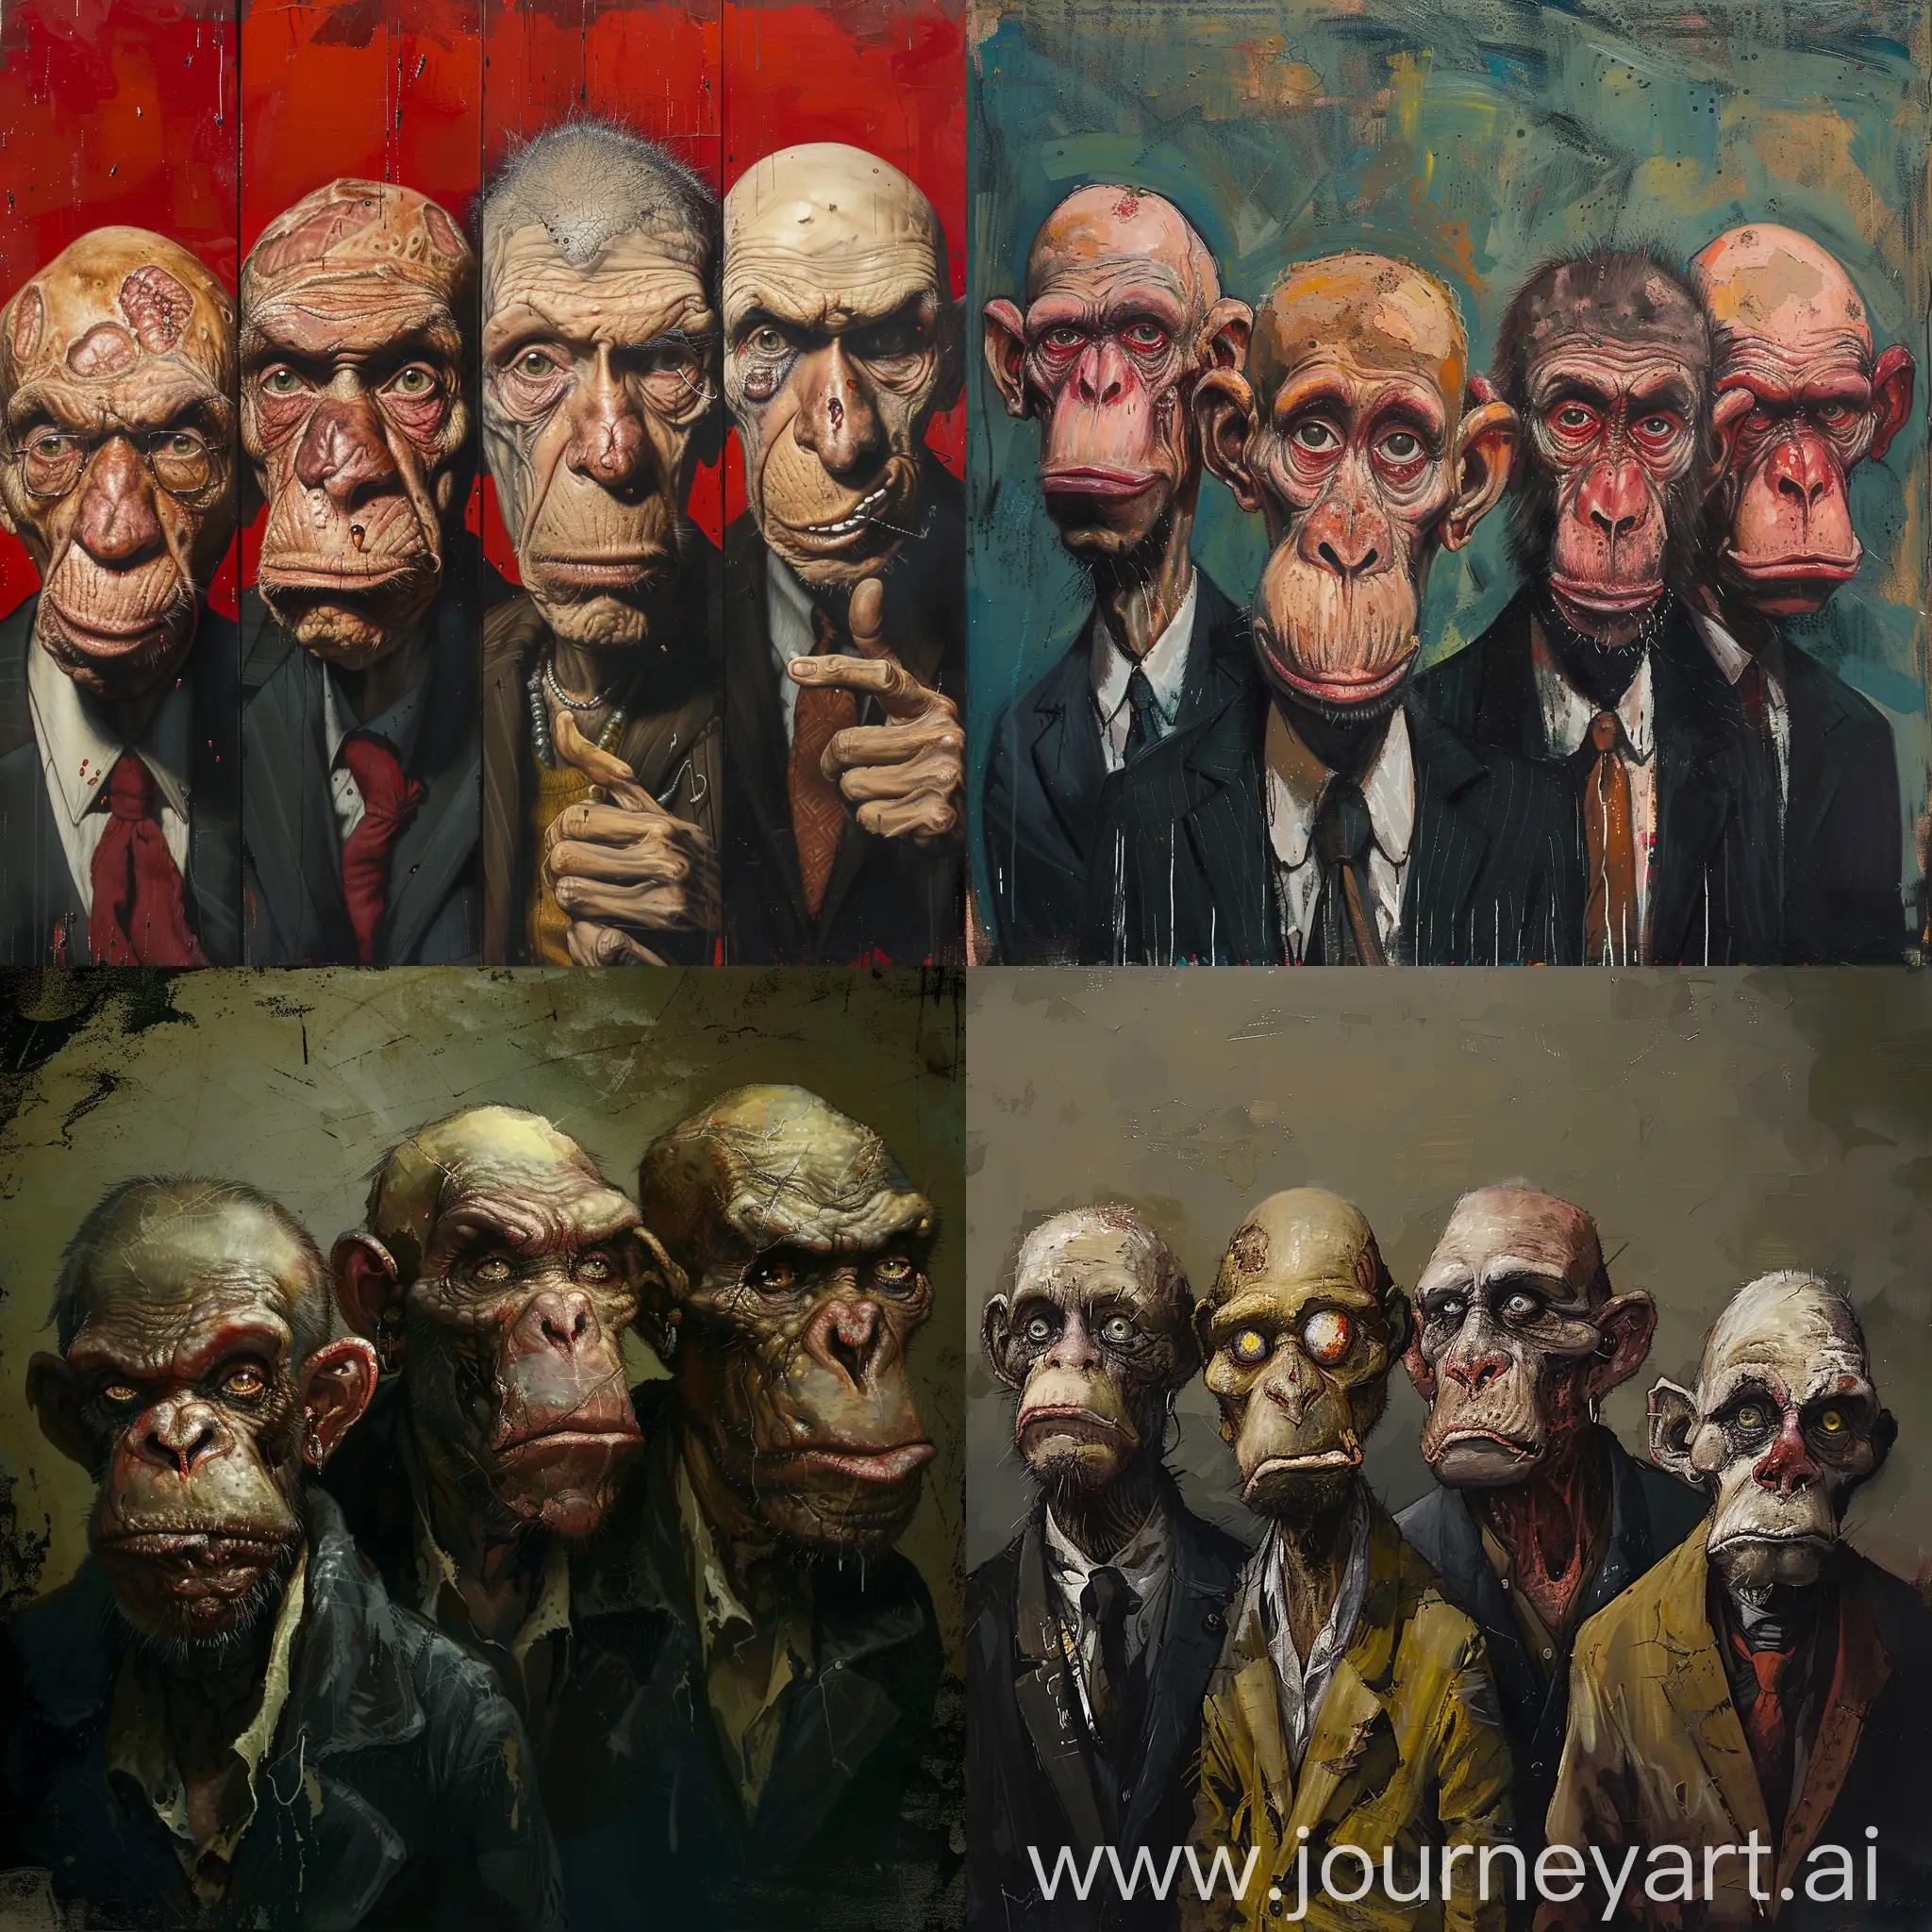 Gang-of-Four-Men-Rotting-MonkeyLike-Appearance-Bald-Leader